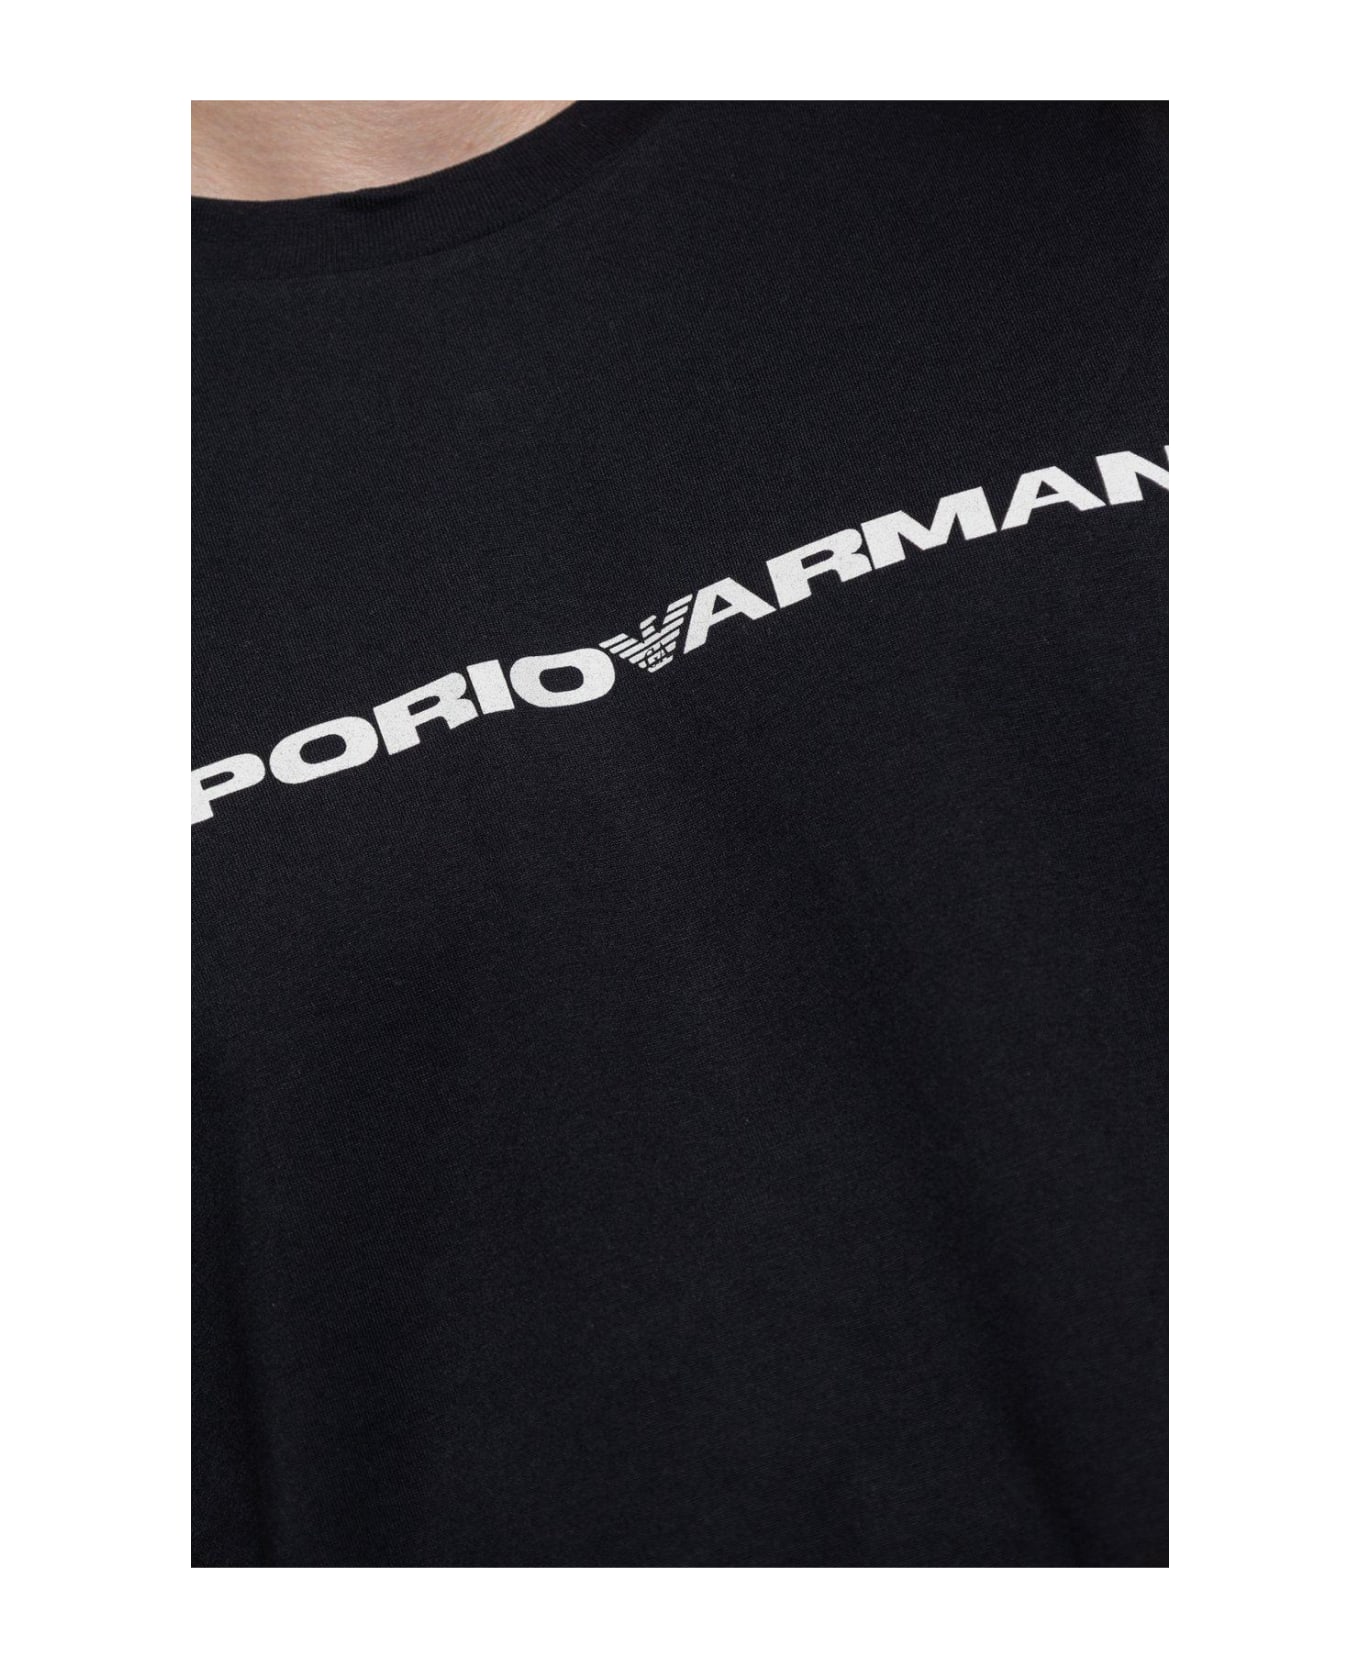 Emporio Armani Branded T-shirt 3 Pack - Variante print